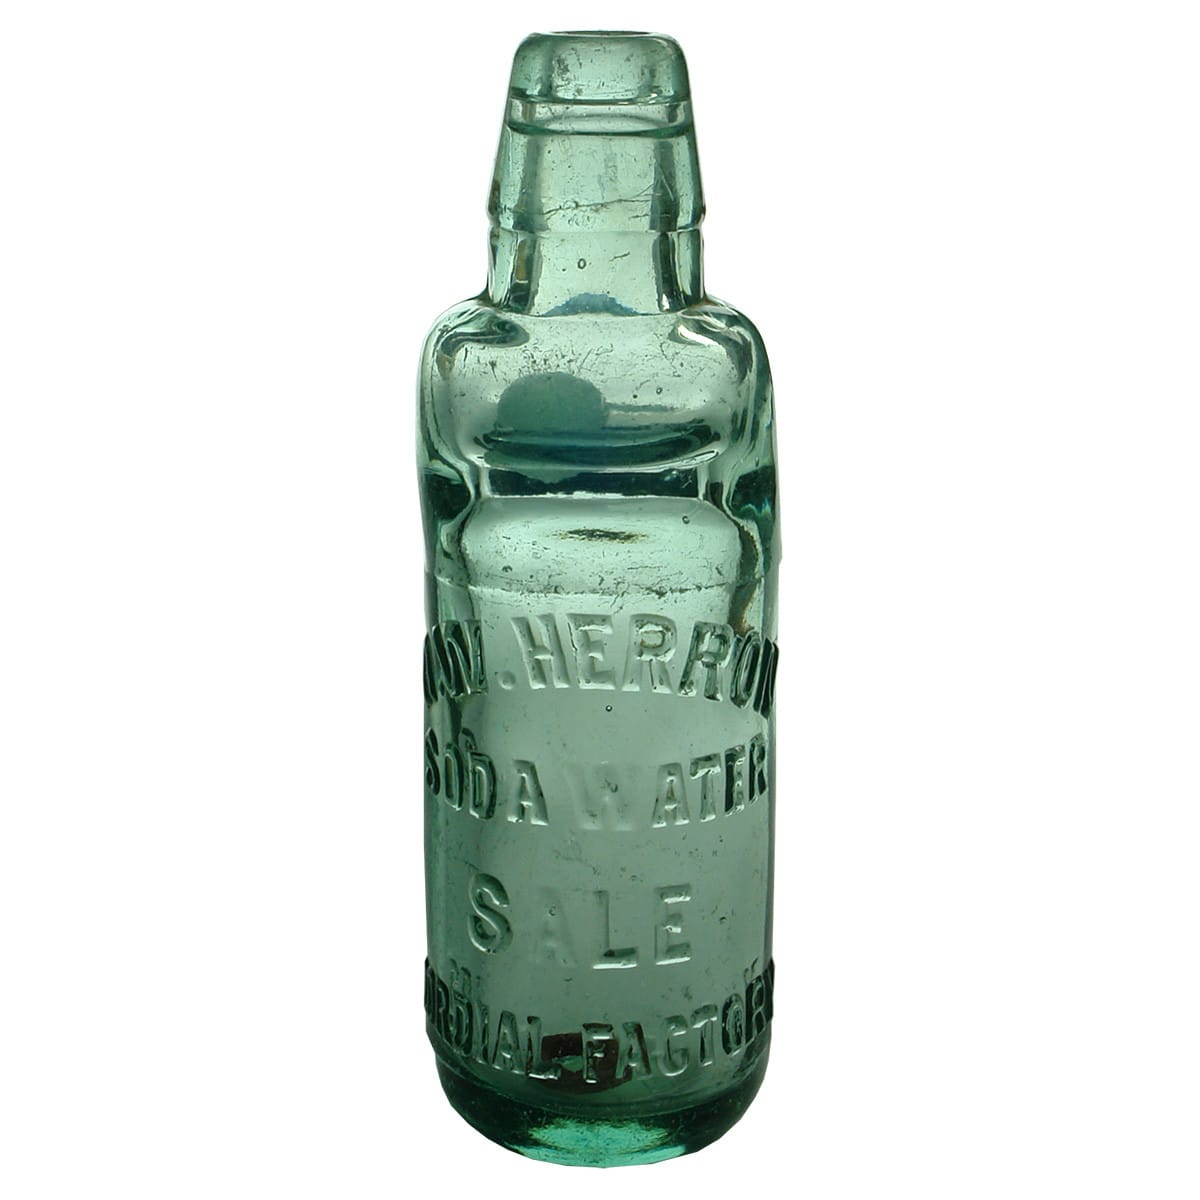 Codd. H. W. Herron, Sale. Soda Water. 6 oz. (Victoria)